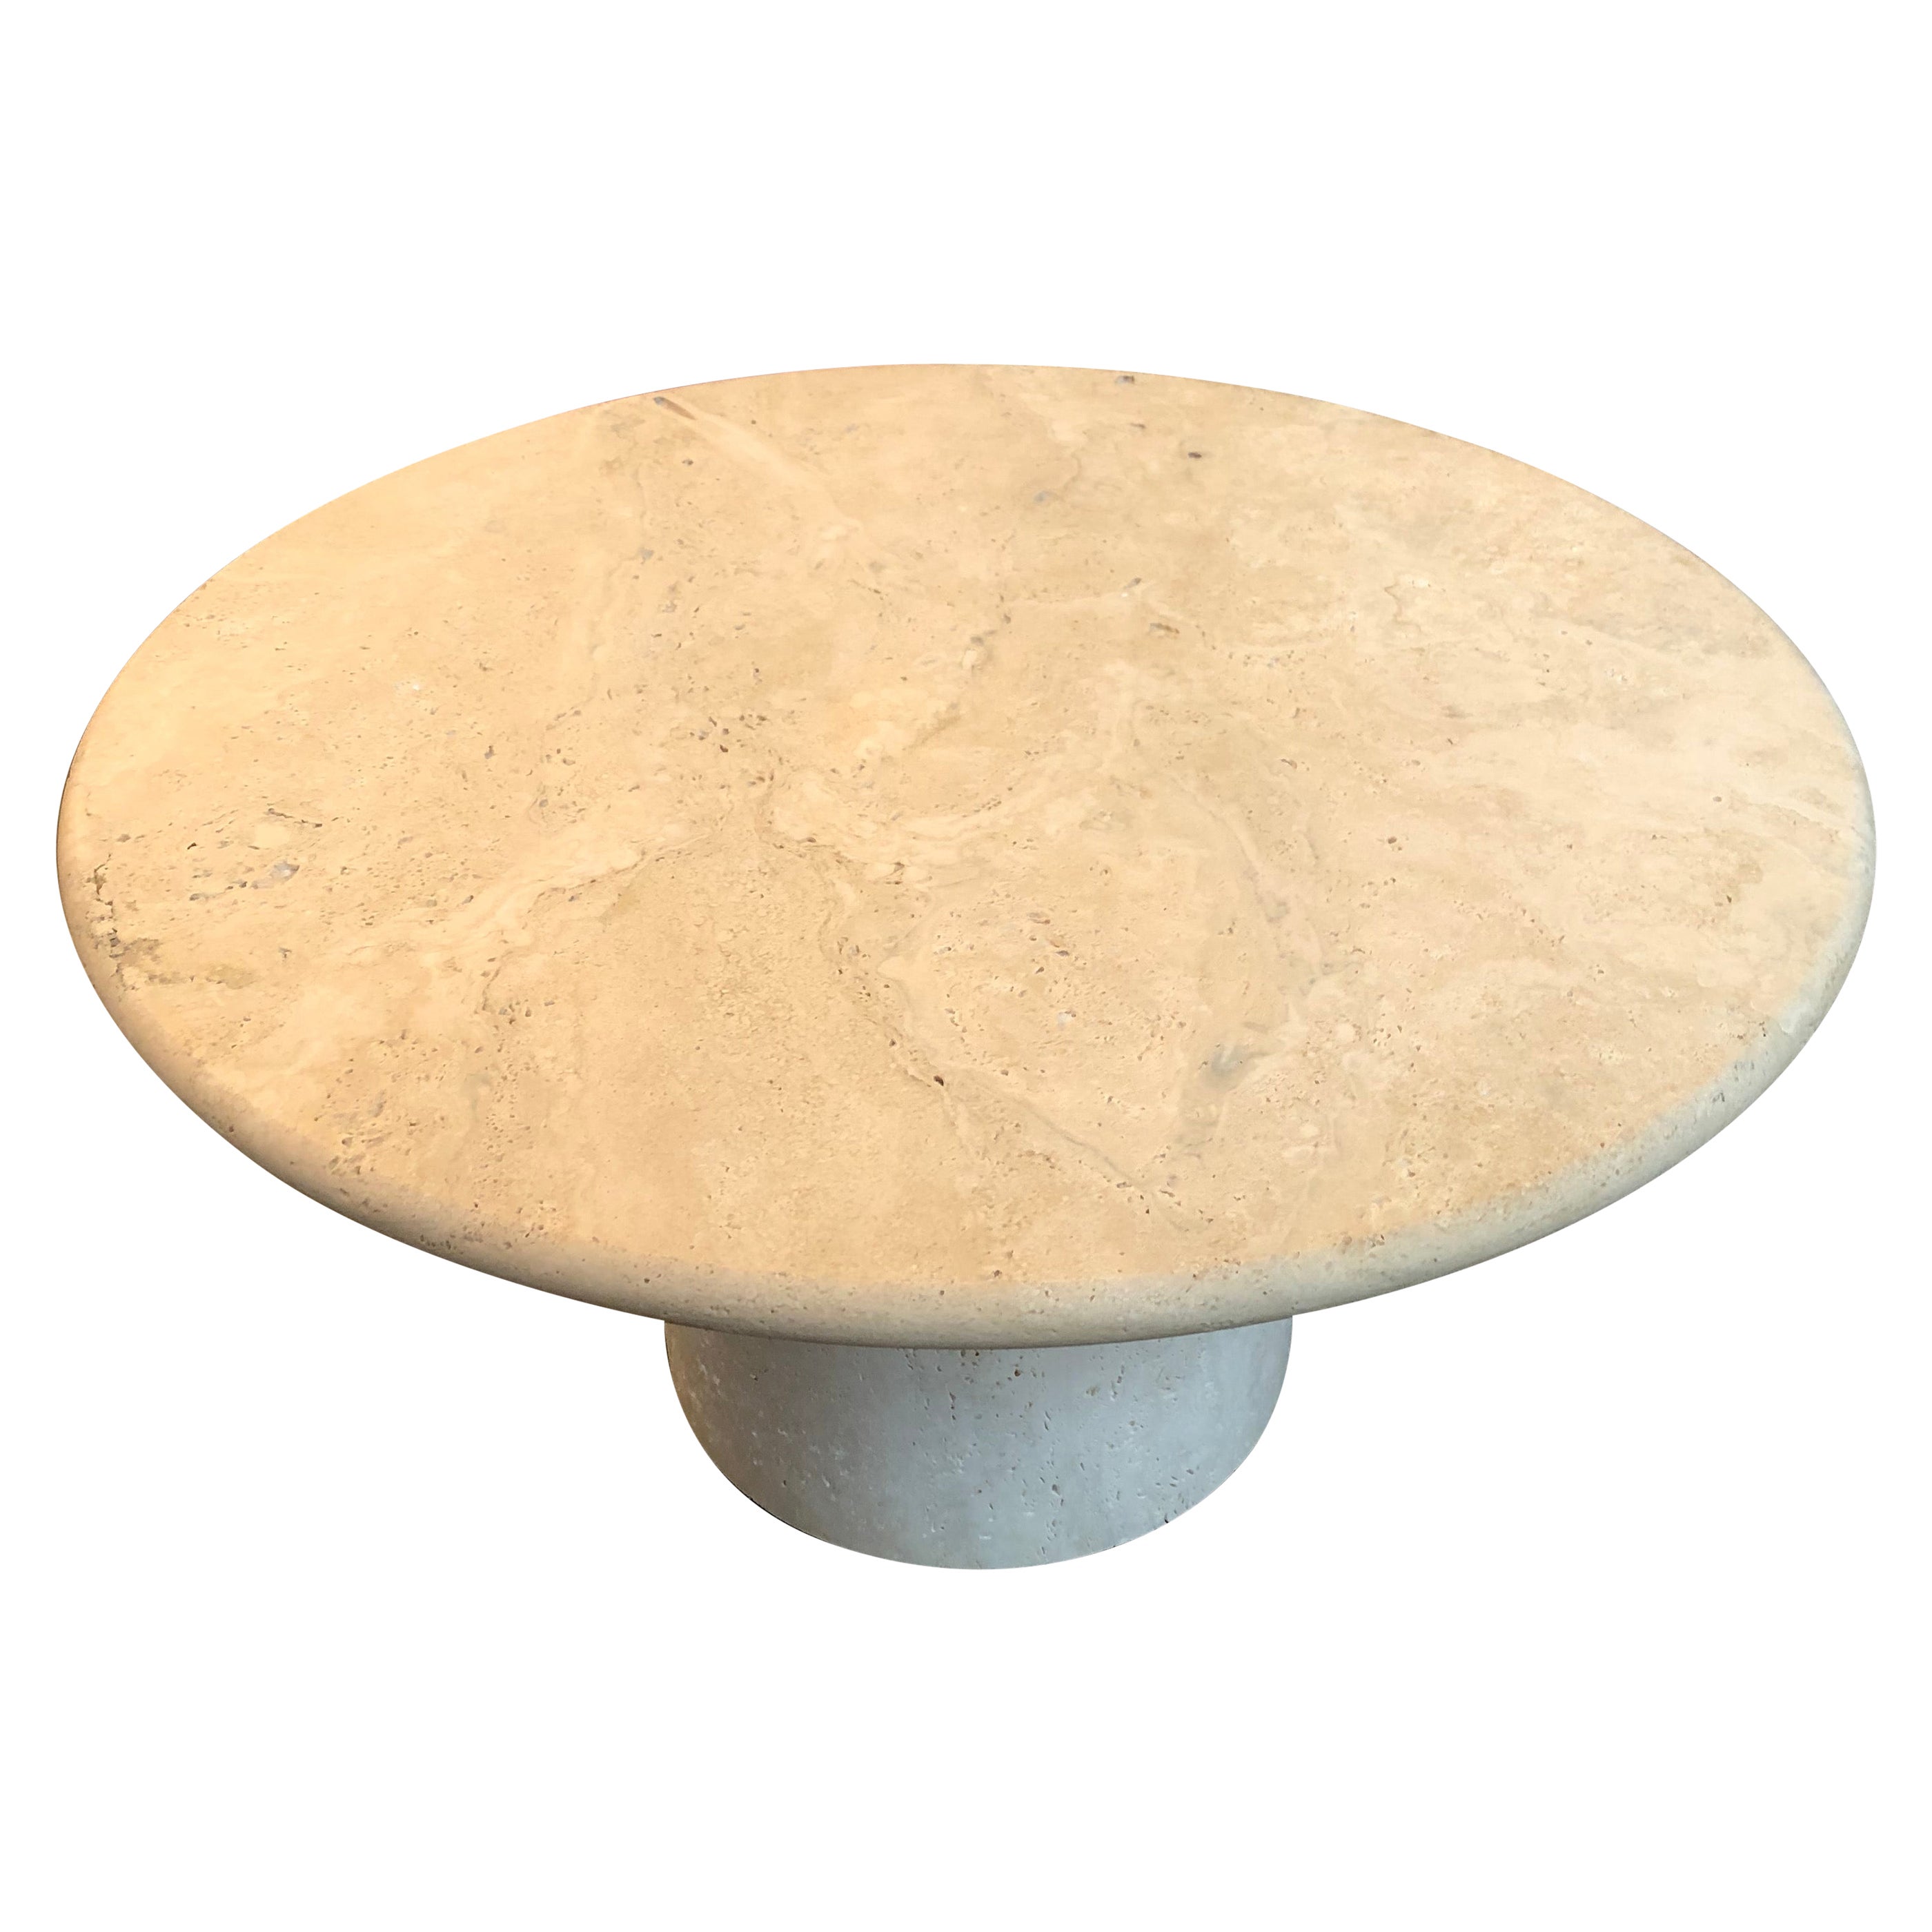 Custom Round Roman Travertine Coffee Table by Le Lampade